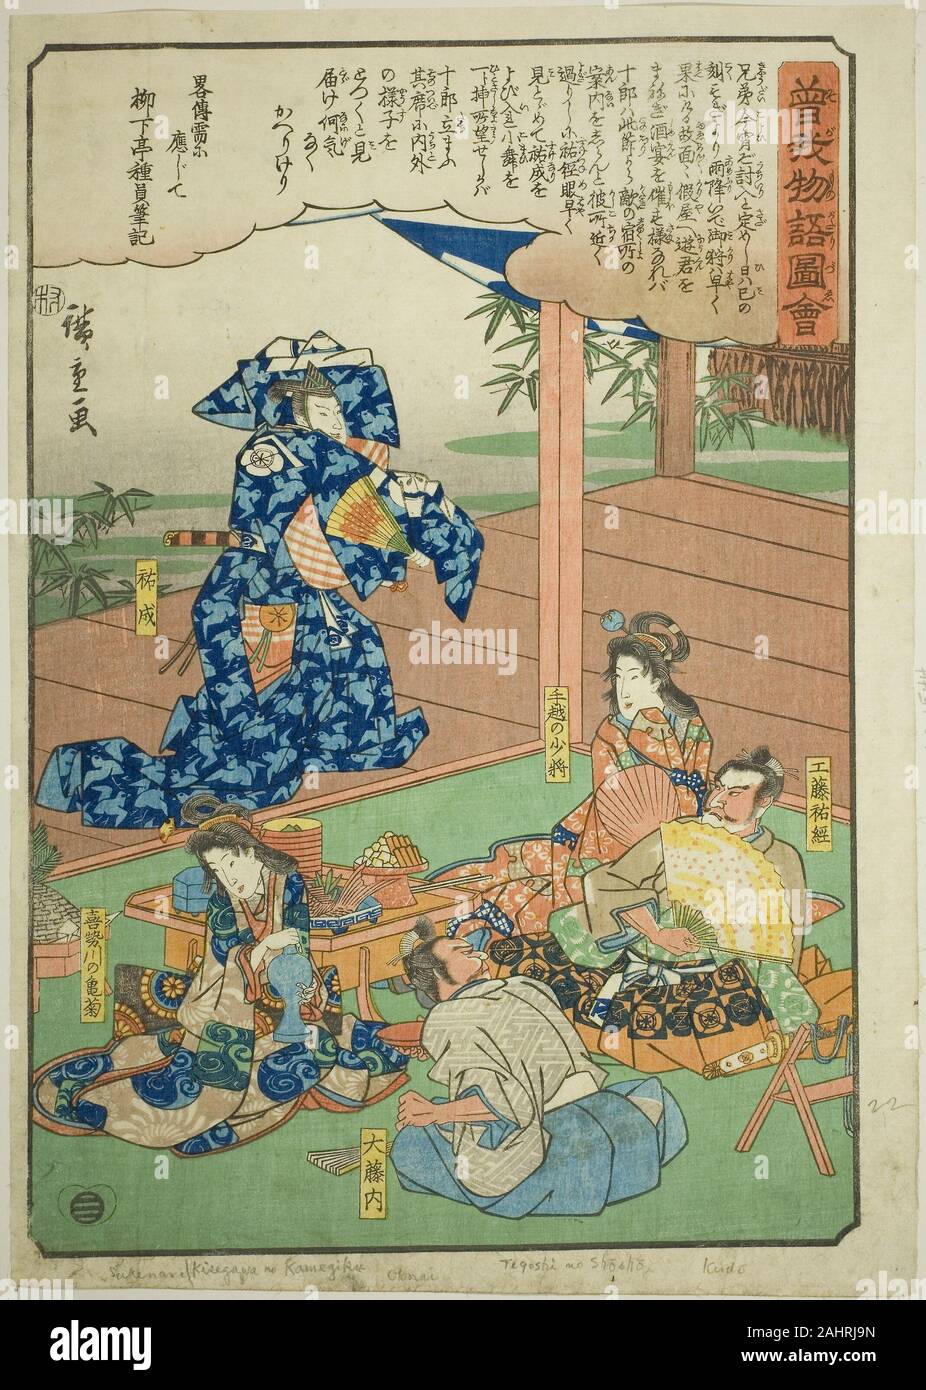 Utagawa Hiroshige. Sukenari (Soga no Juro) dancing before